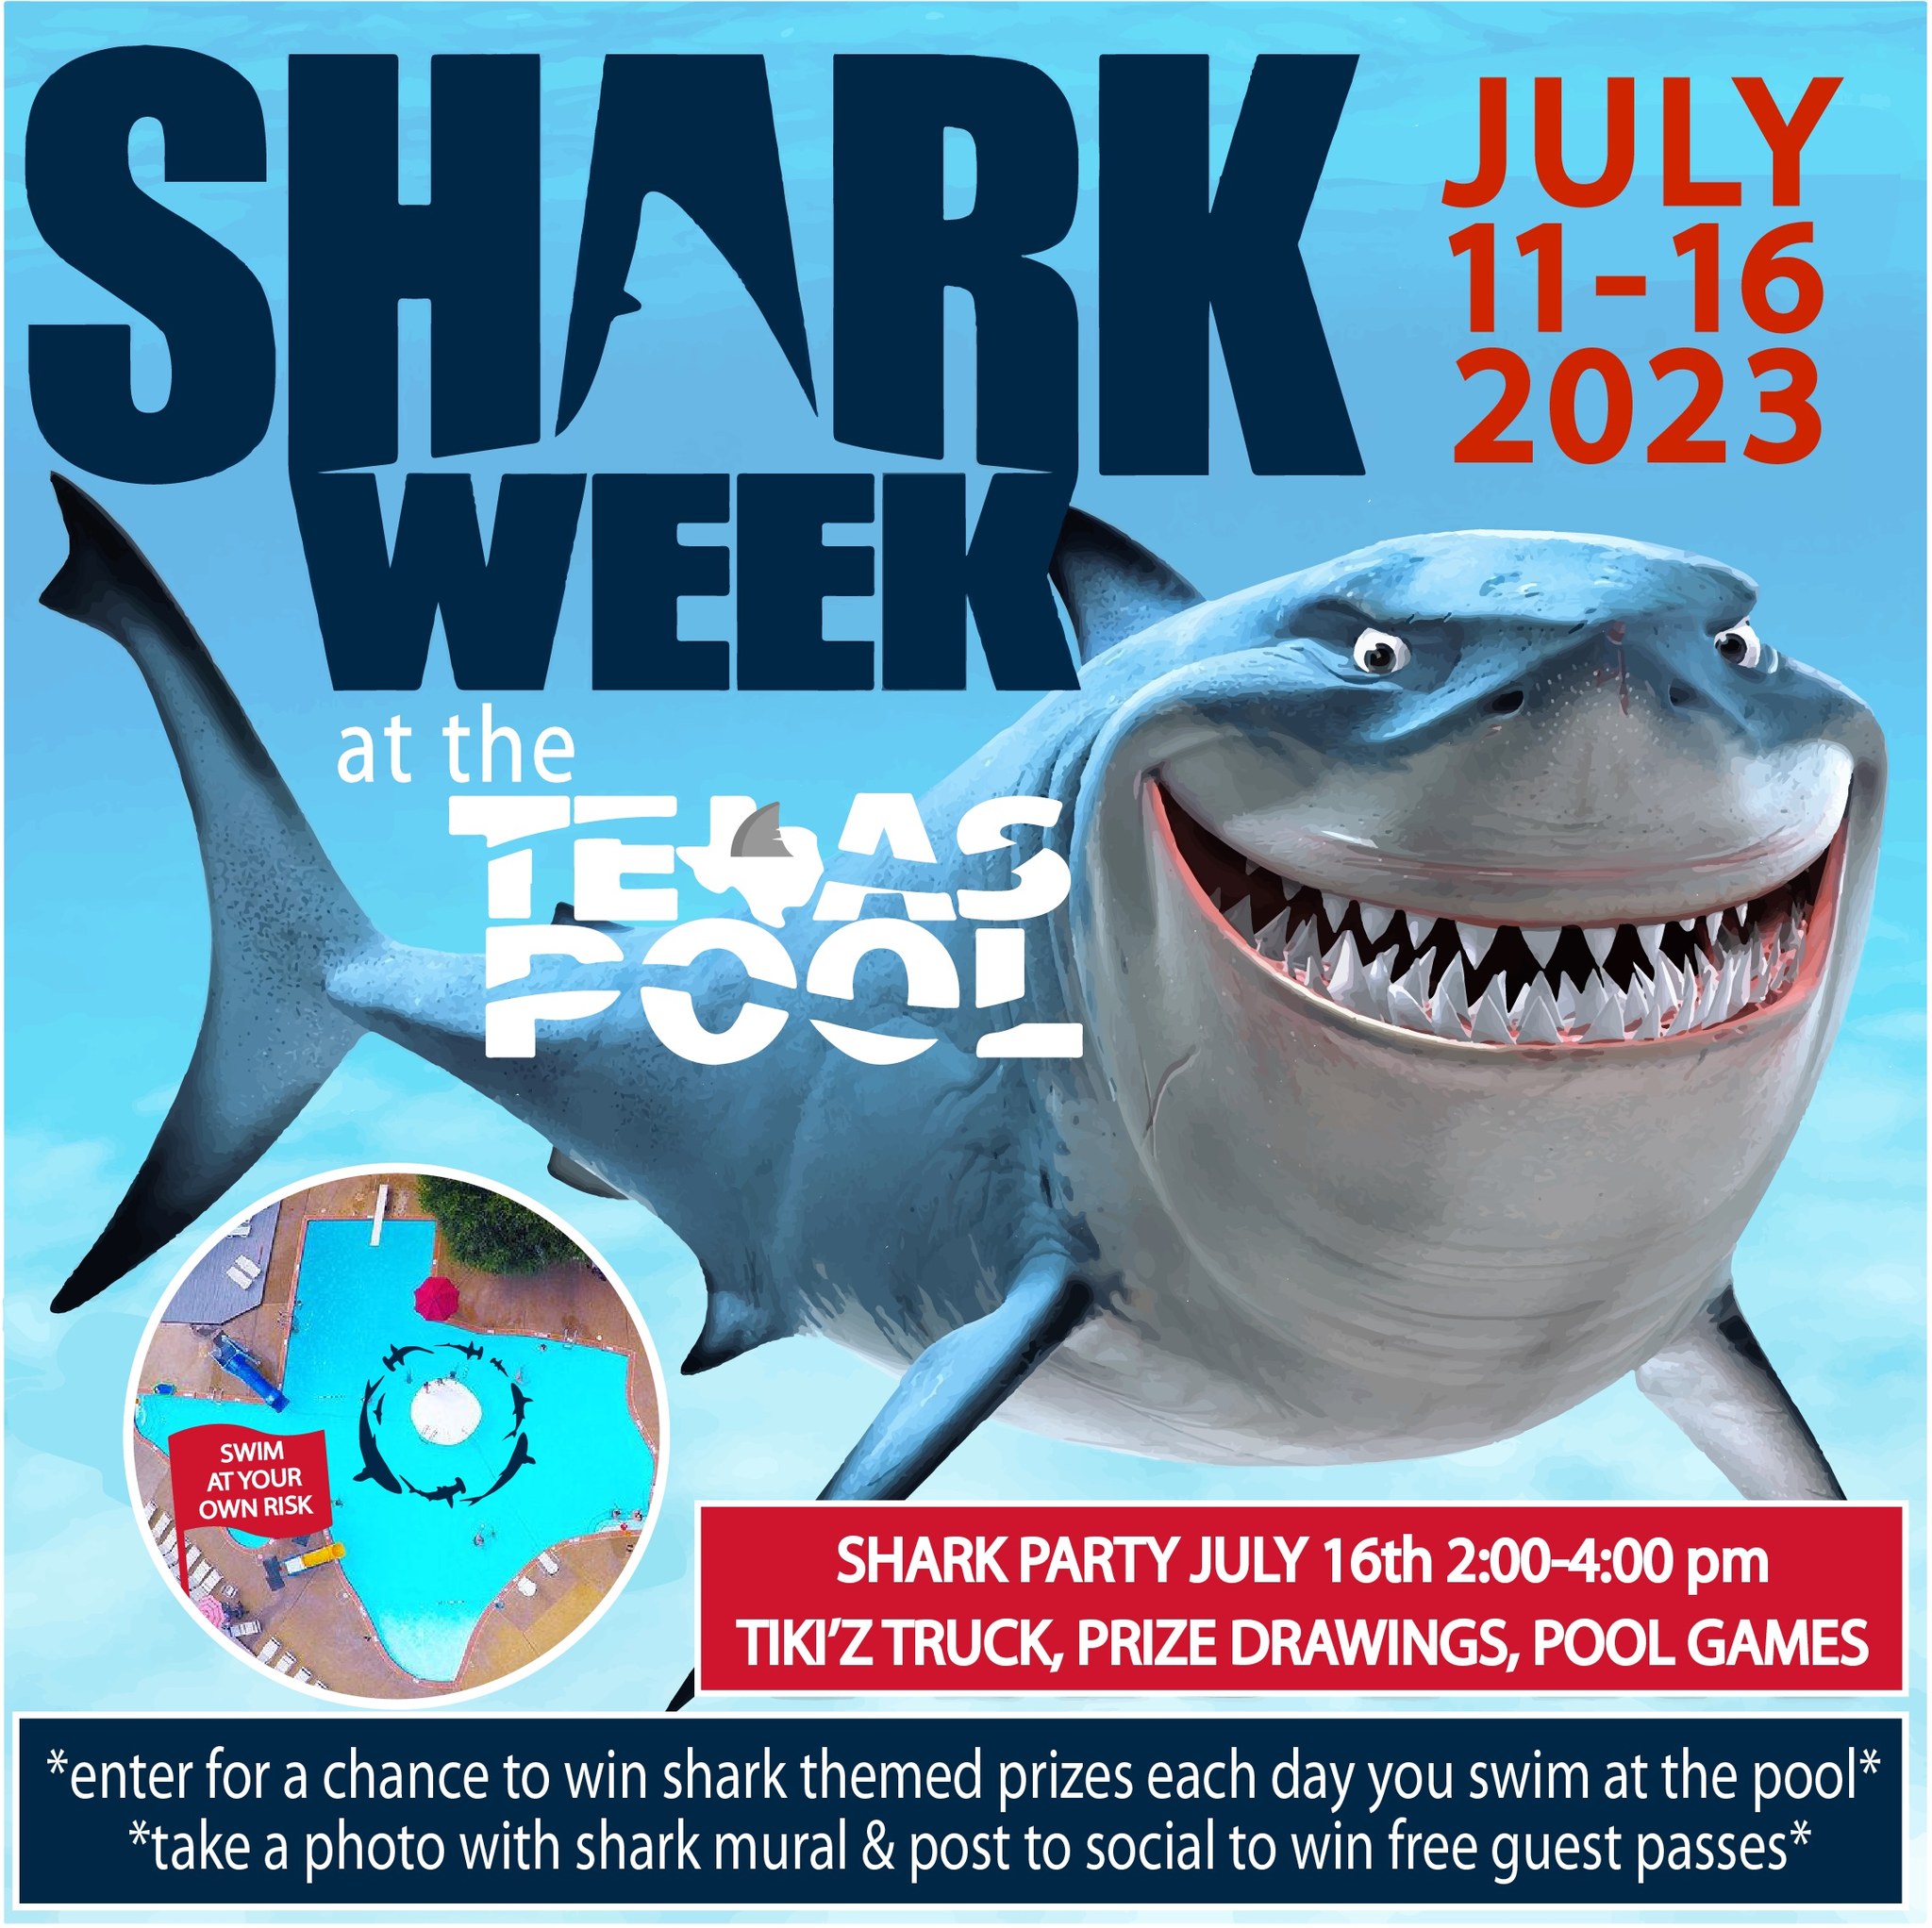 Shark Week at Texas Pool Facebook Image